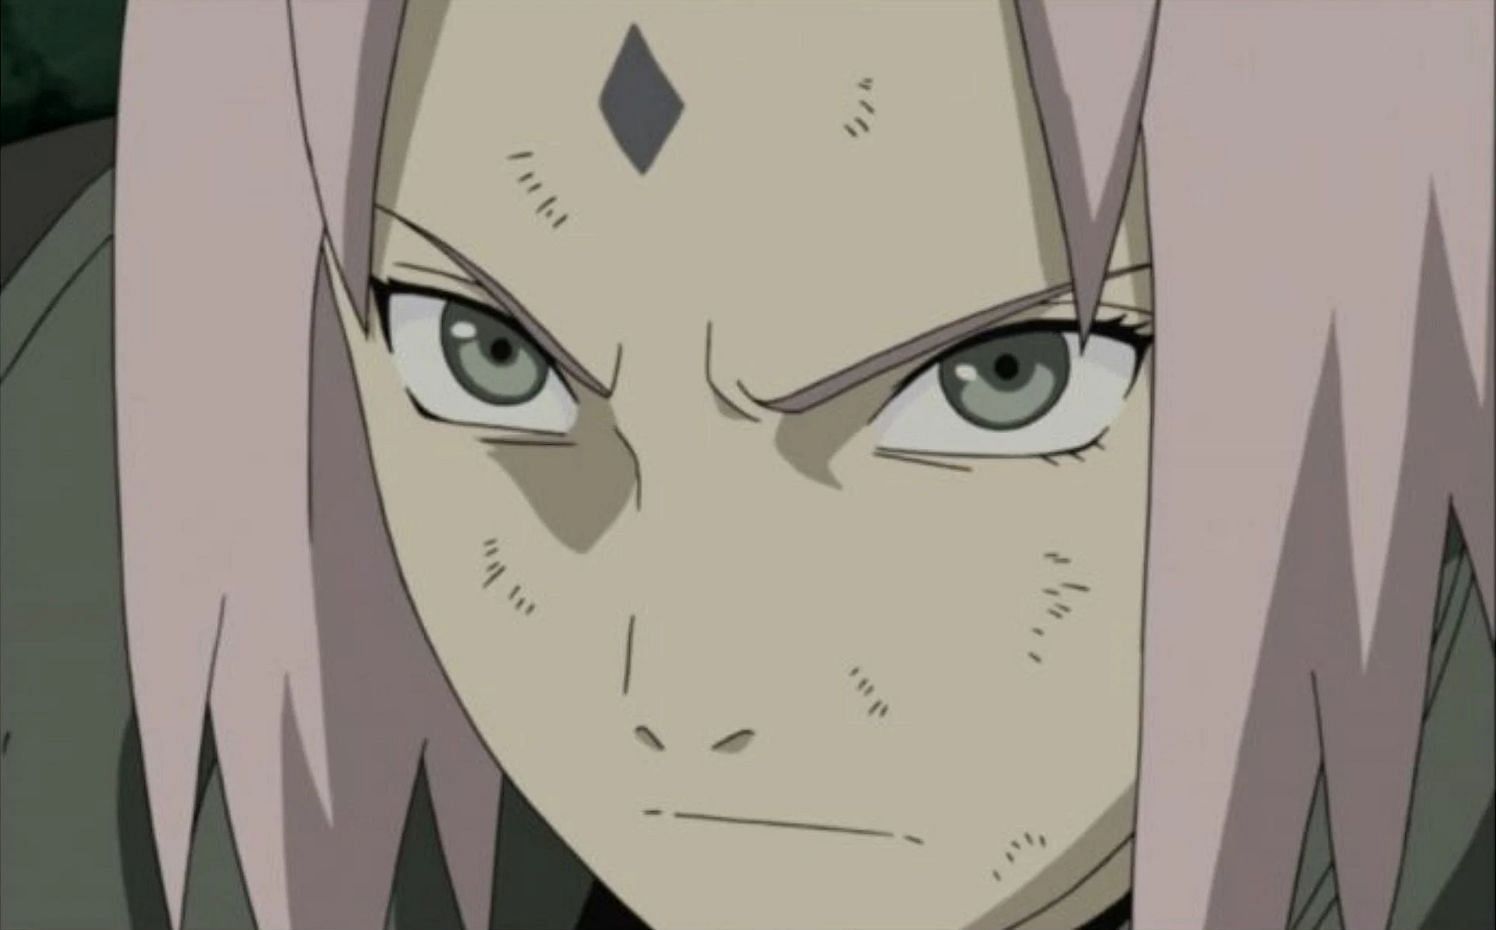 Sakura Haruno as shown in the anime (Image via Naruto)